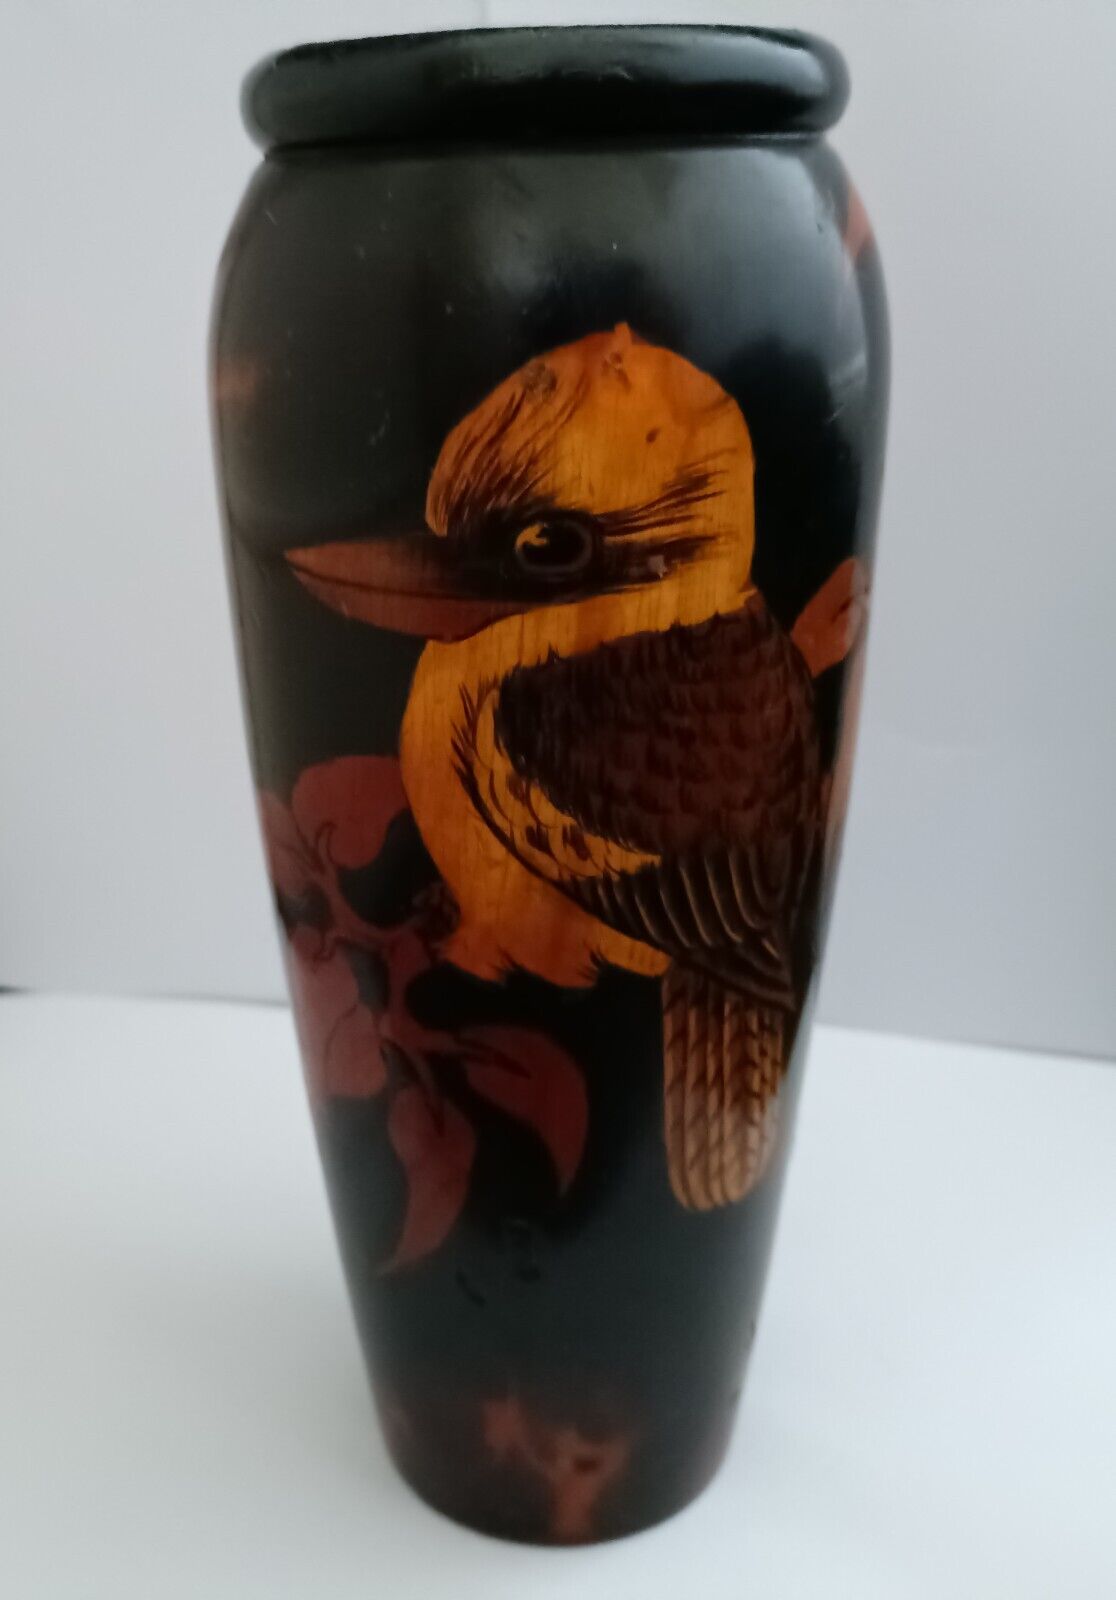 Superb Pokerwork 'Kookaburra in Gum Tree' Vase - C 1920-1930: Amazing display